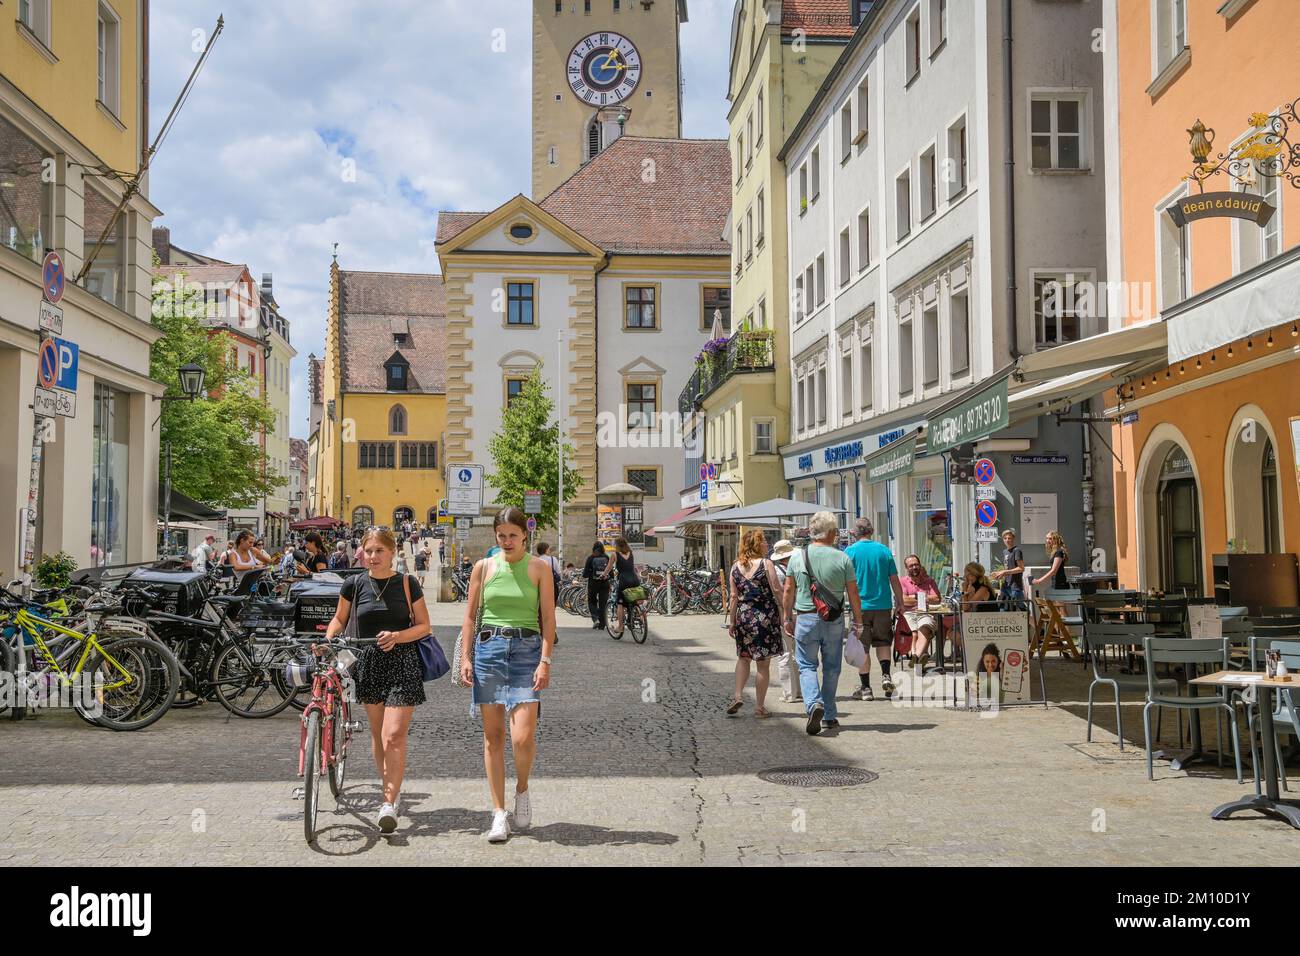 Passanten, Altstadt, Kohlenmarkt, Goliathstraße, Regensburg, Bayern, Deutschland Stock Photo